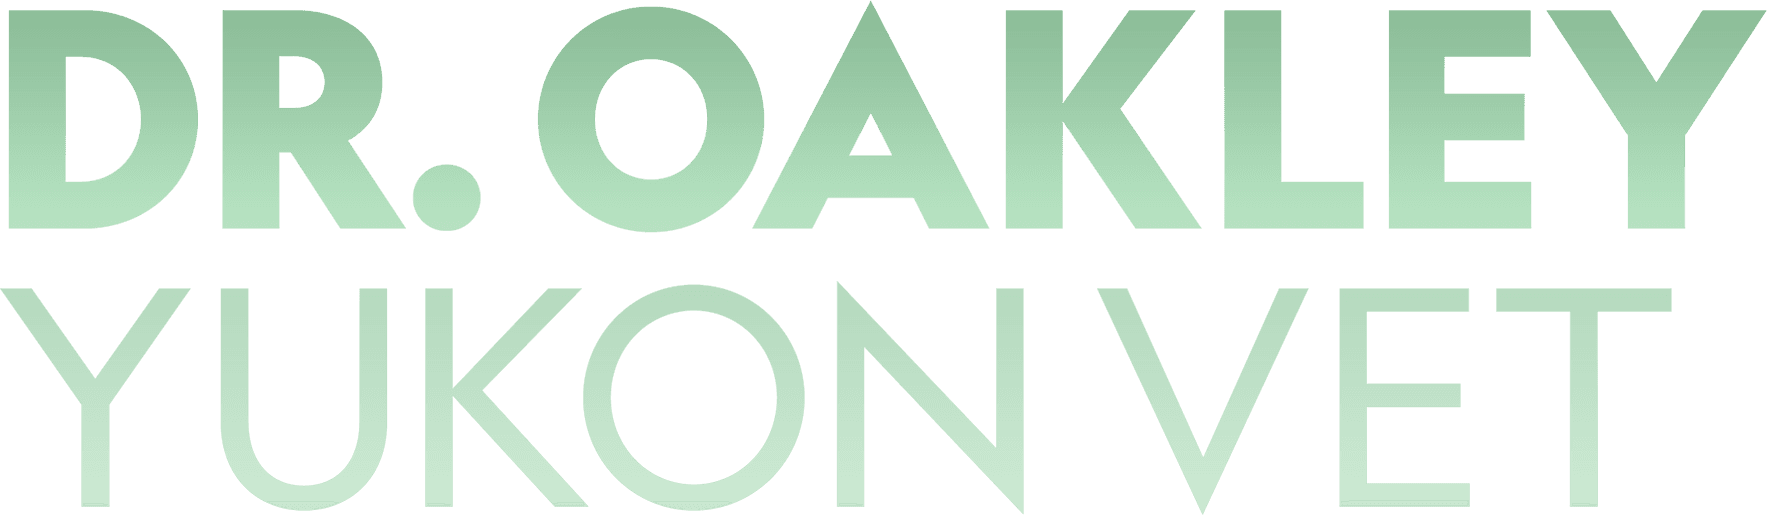 Dr. Oakley, Yukon Vet logo